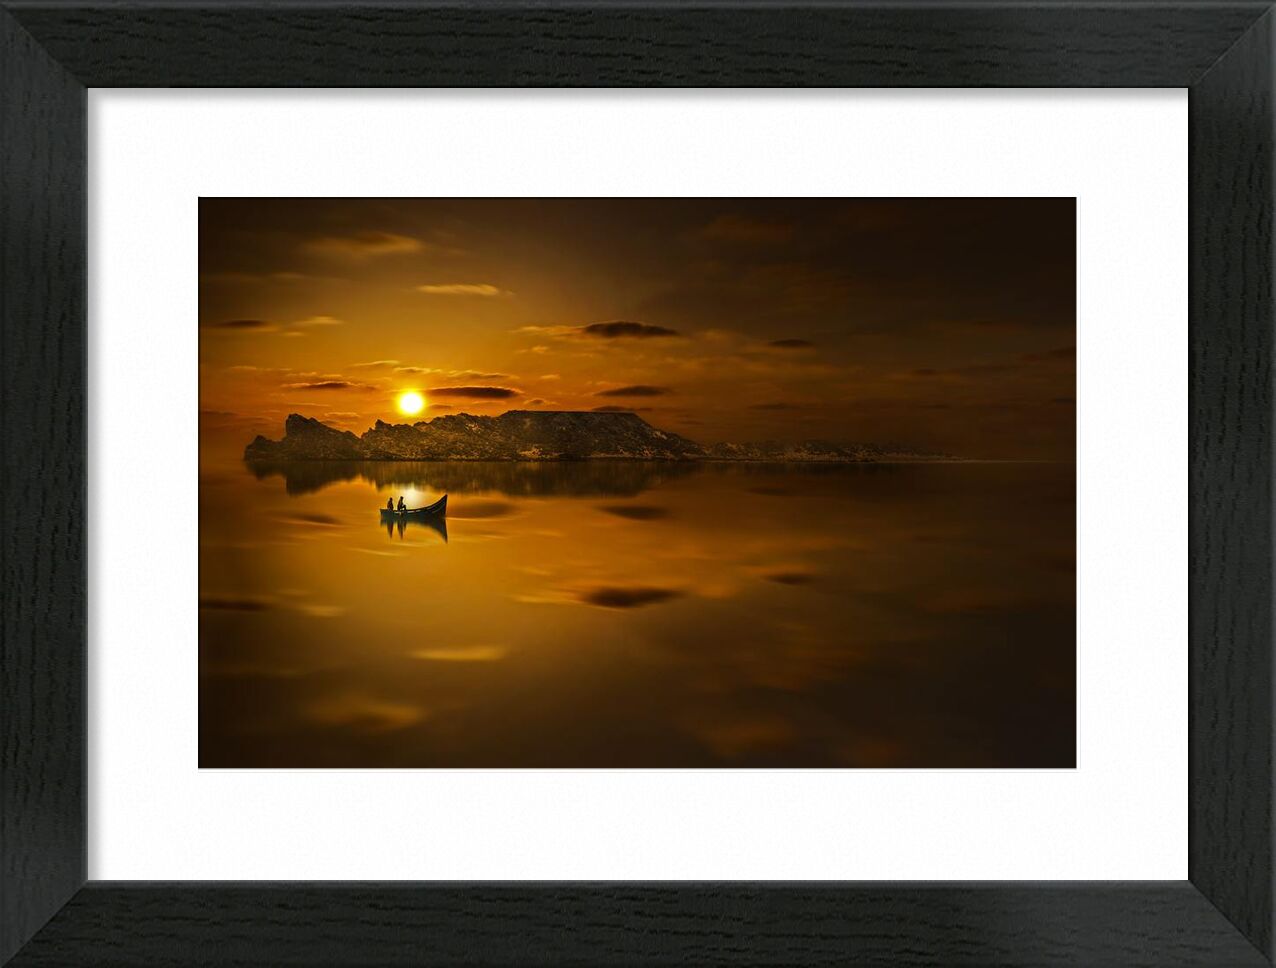 Golden water from Aliss ART, Prodi Art, golden sunset, water, sunset, Sun, silhouette, seashore, seascape, sea, reflection, ocean, Morocco, light, landscape, lake, evening, dusk, dawn, boat, beach, backlit